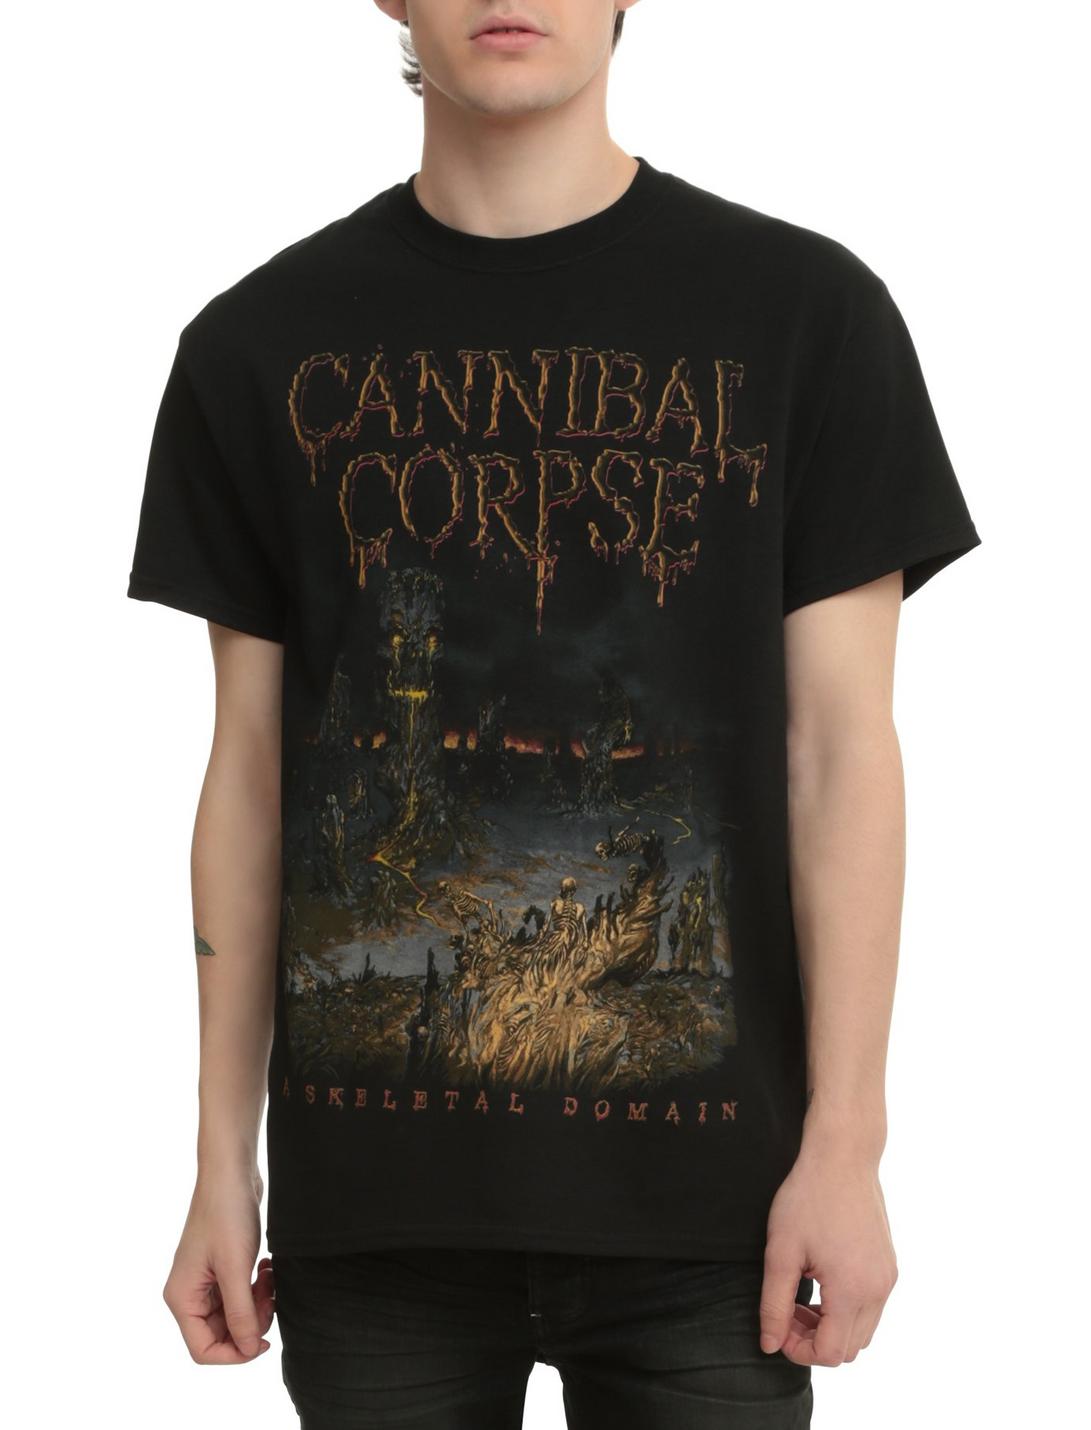 Cannibal Corpse A Skeletal Domain T-Shirt, BLACK, hi-res